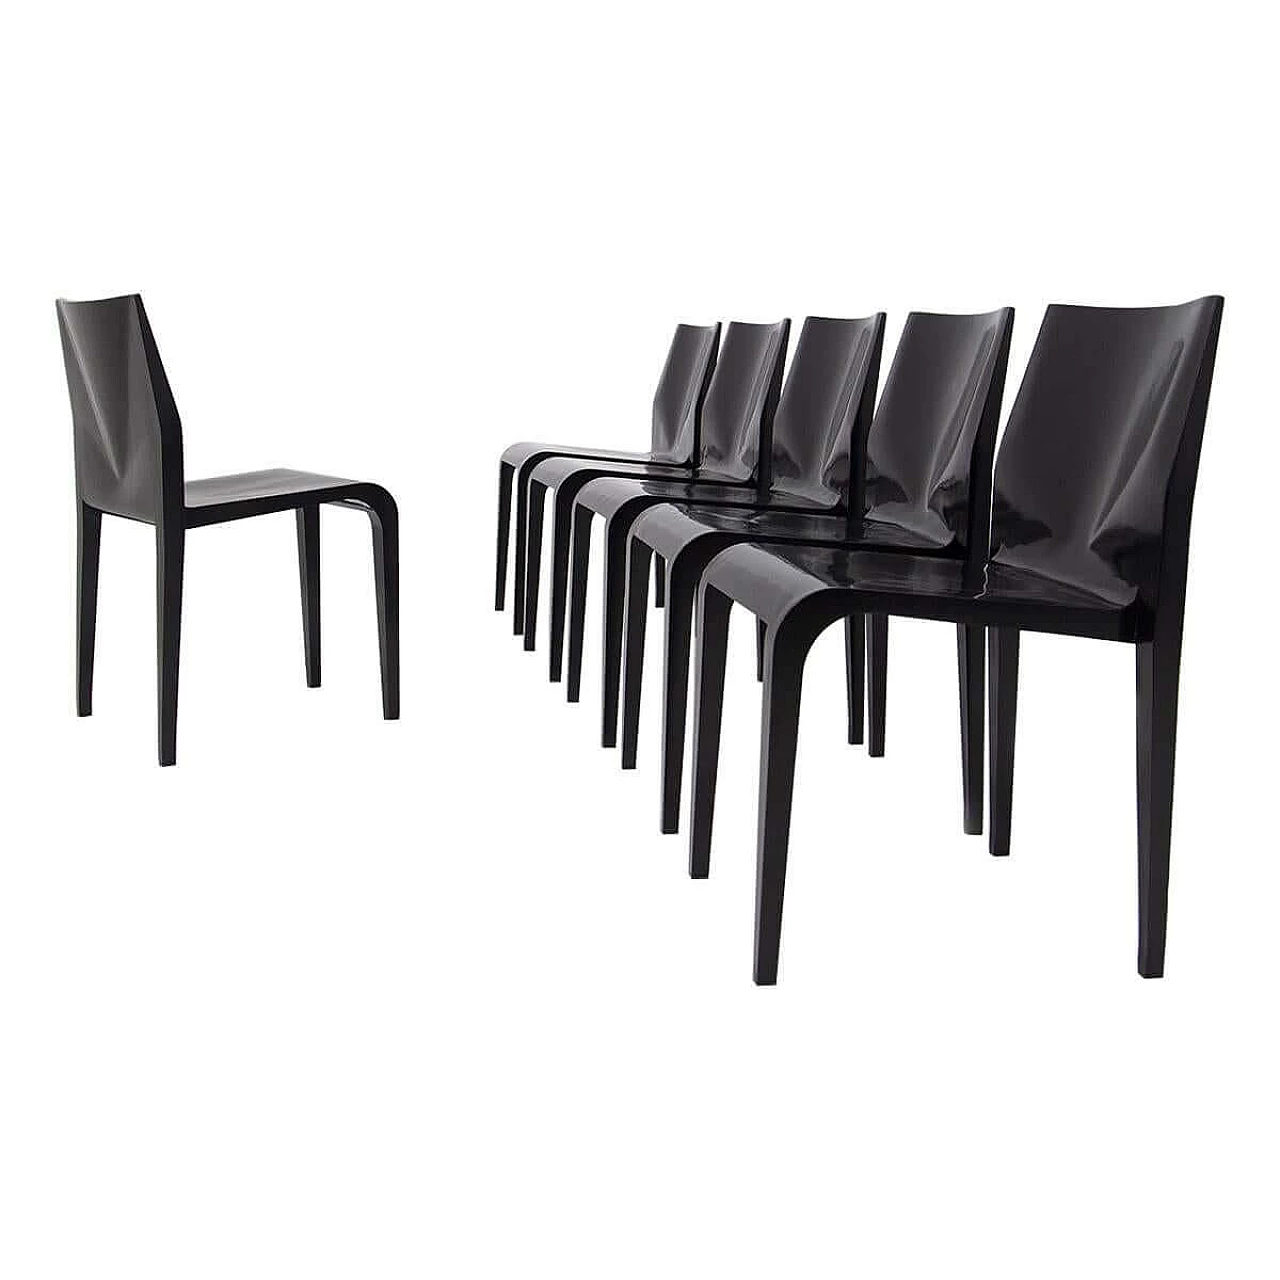 Laleggera chair by Riccardo Blumer in black lacquered wood, 1990s 1407780